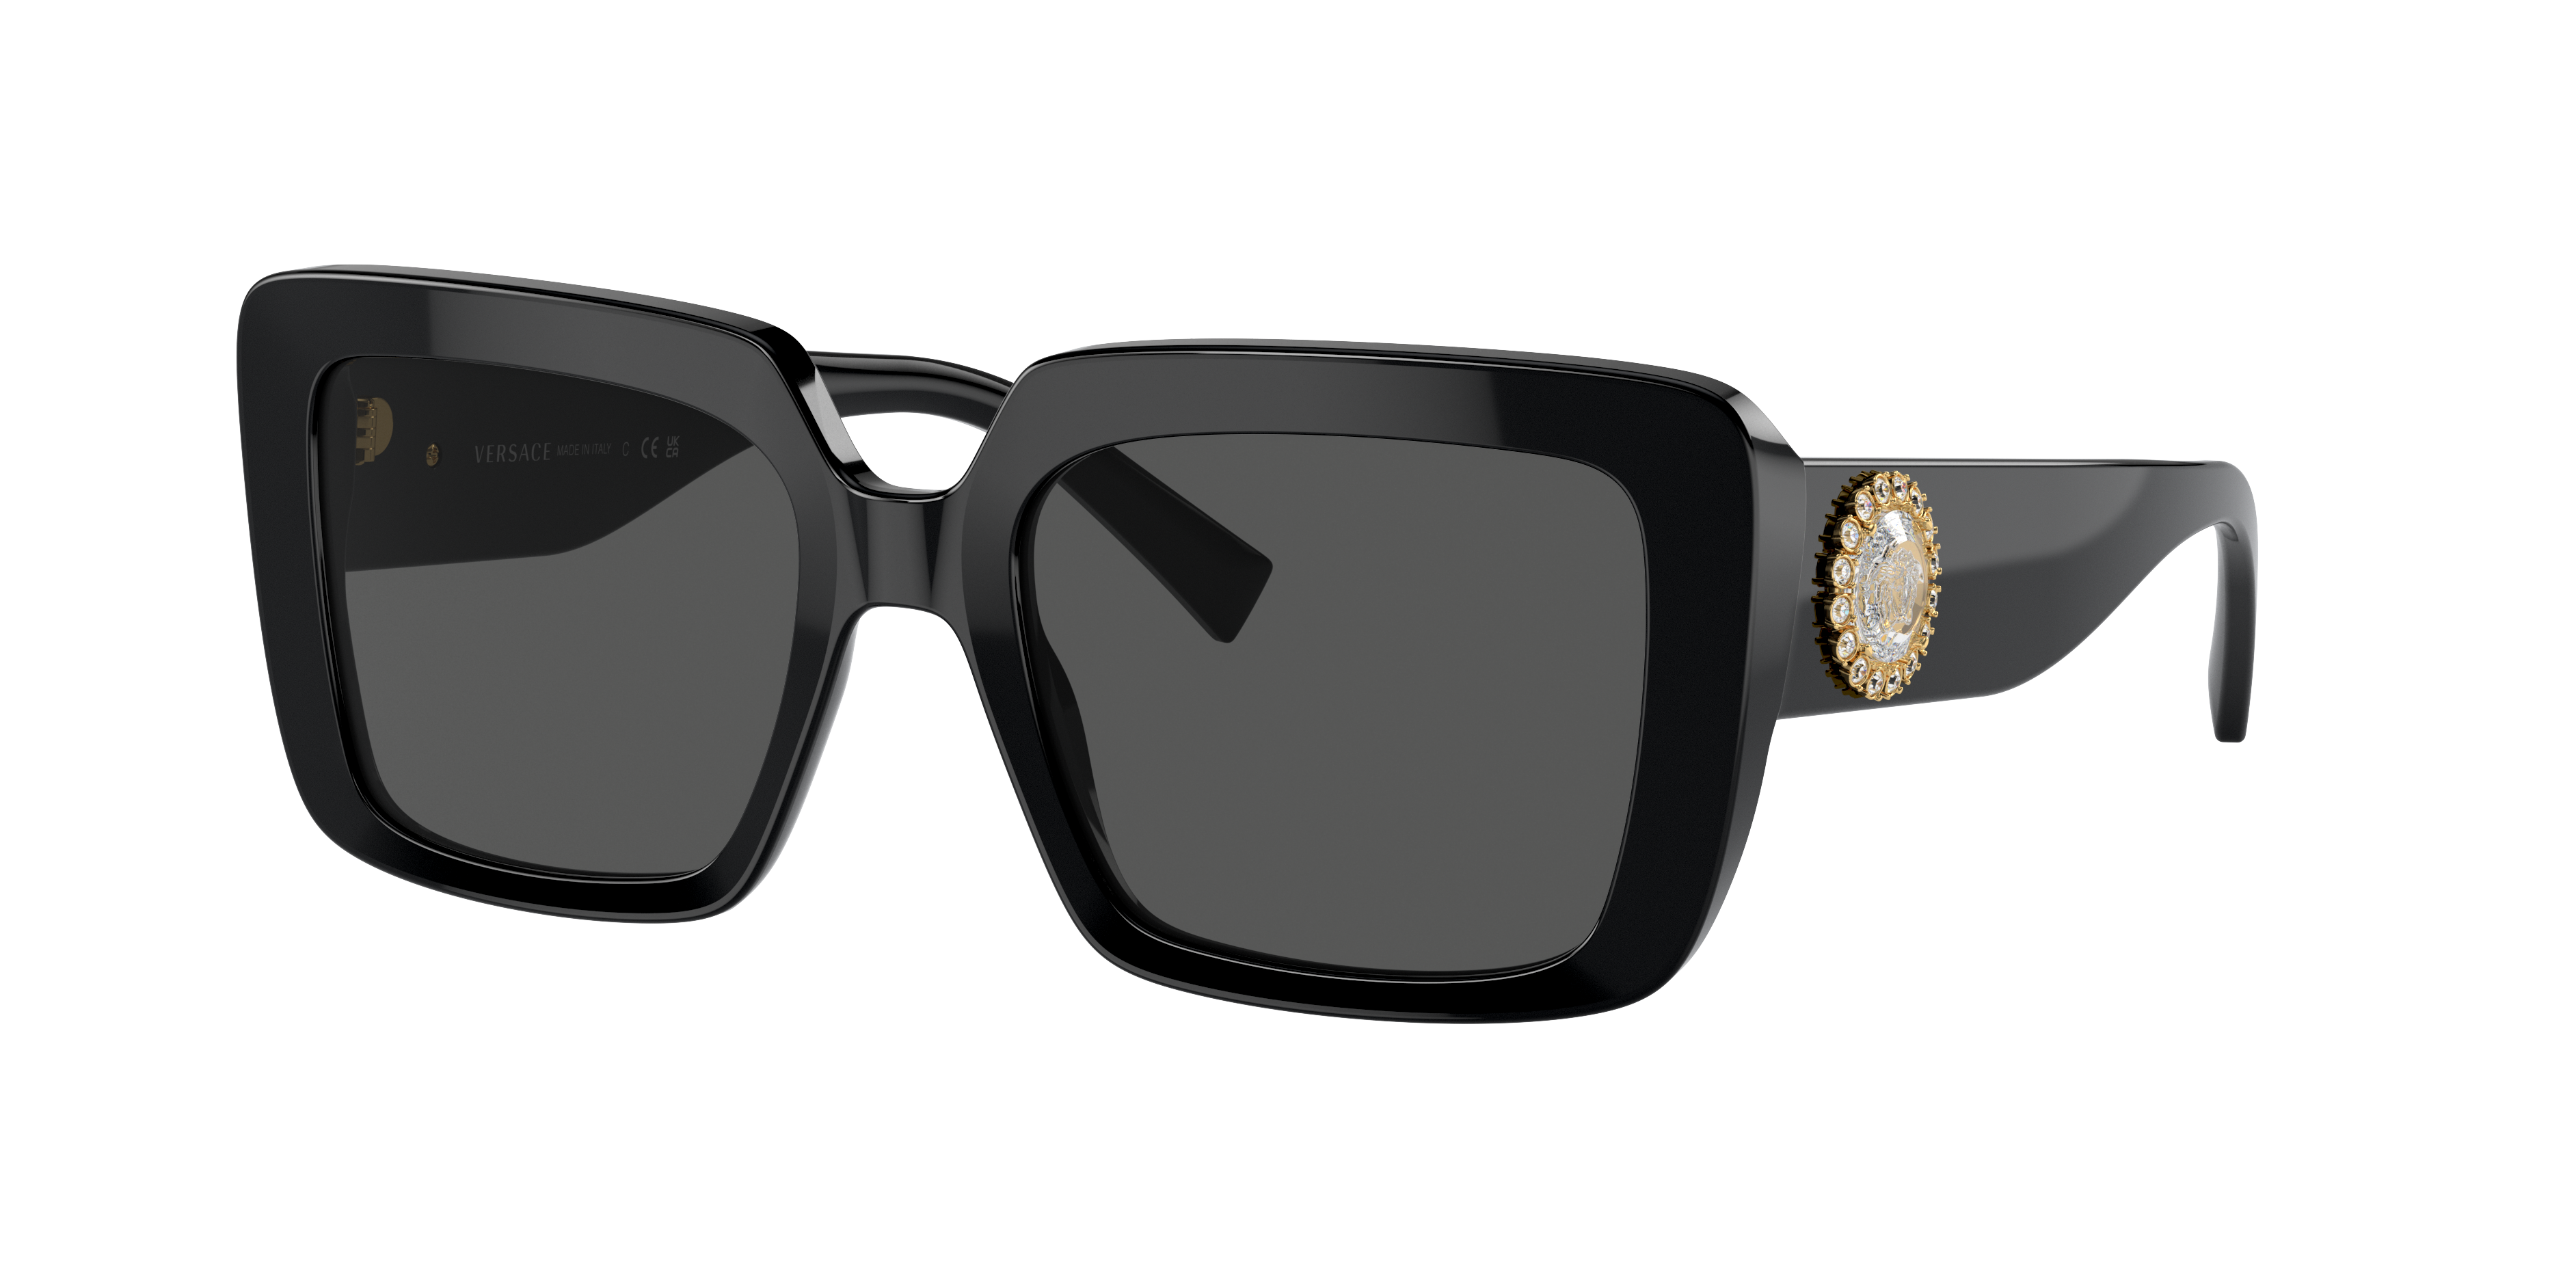 versace goggles price